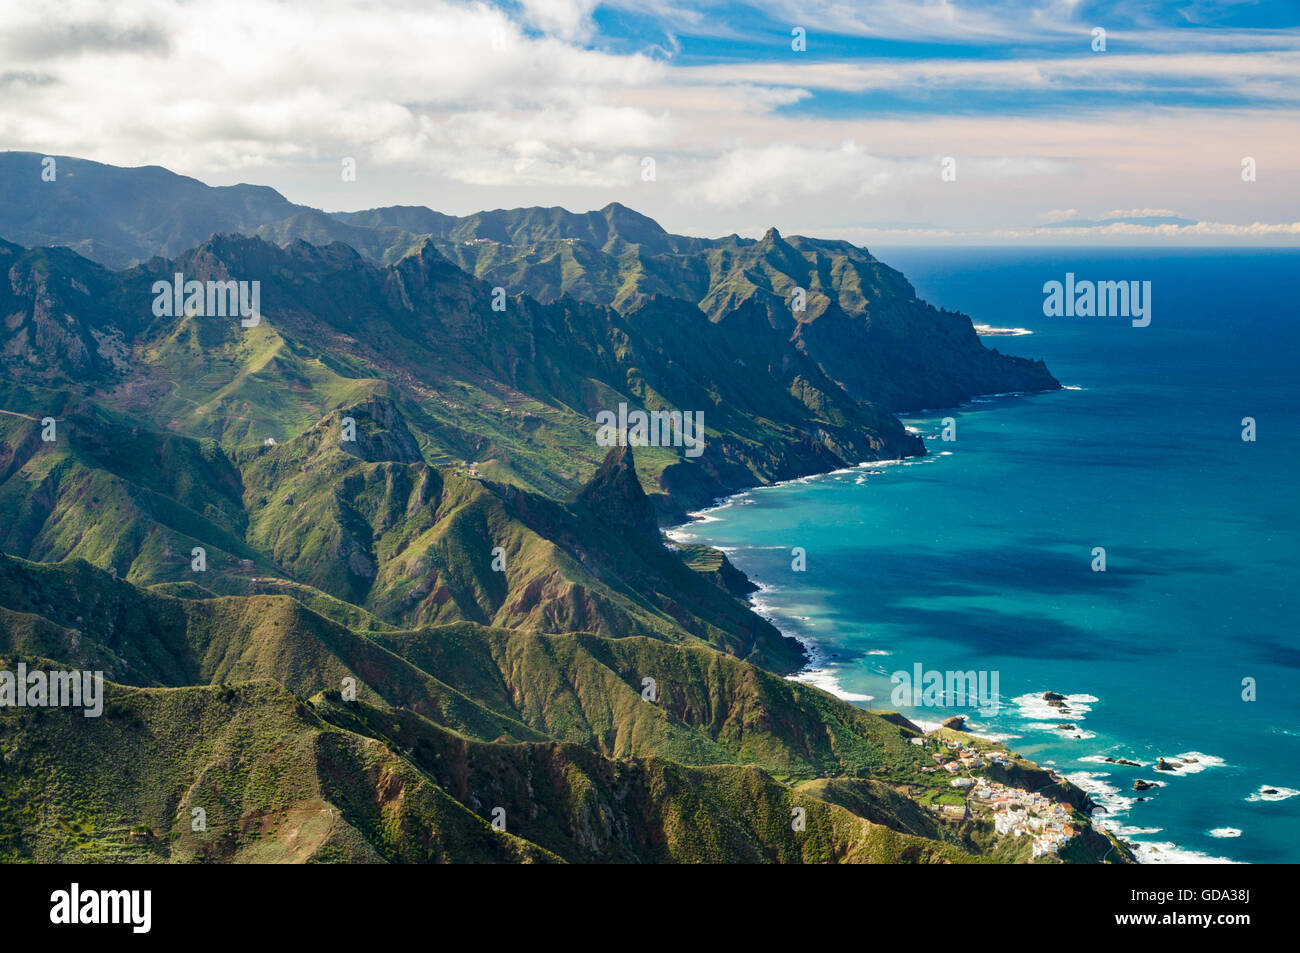 Anaga mountains and Atlatic ocean coast, Tenerife, Canary islands, Spain Stock Photo